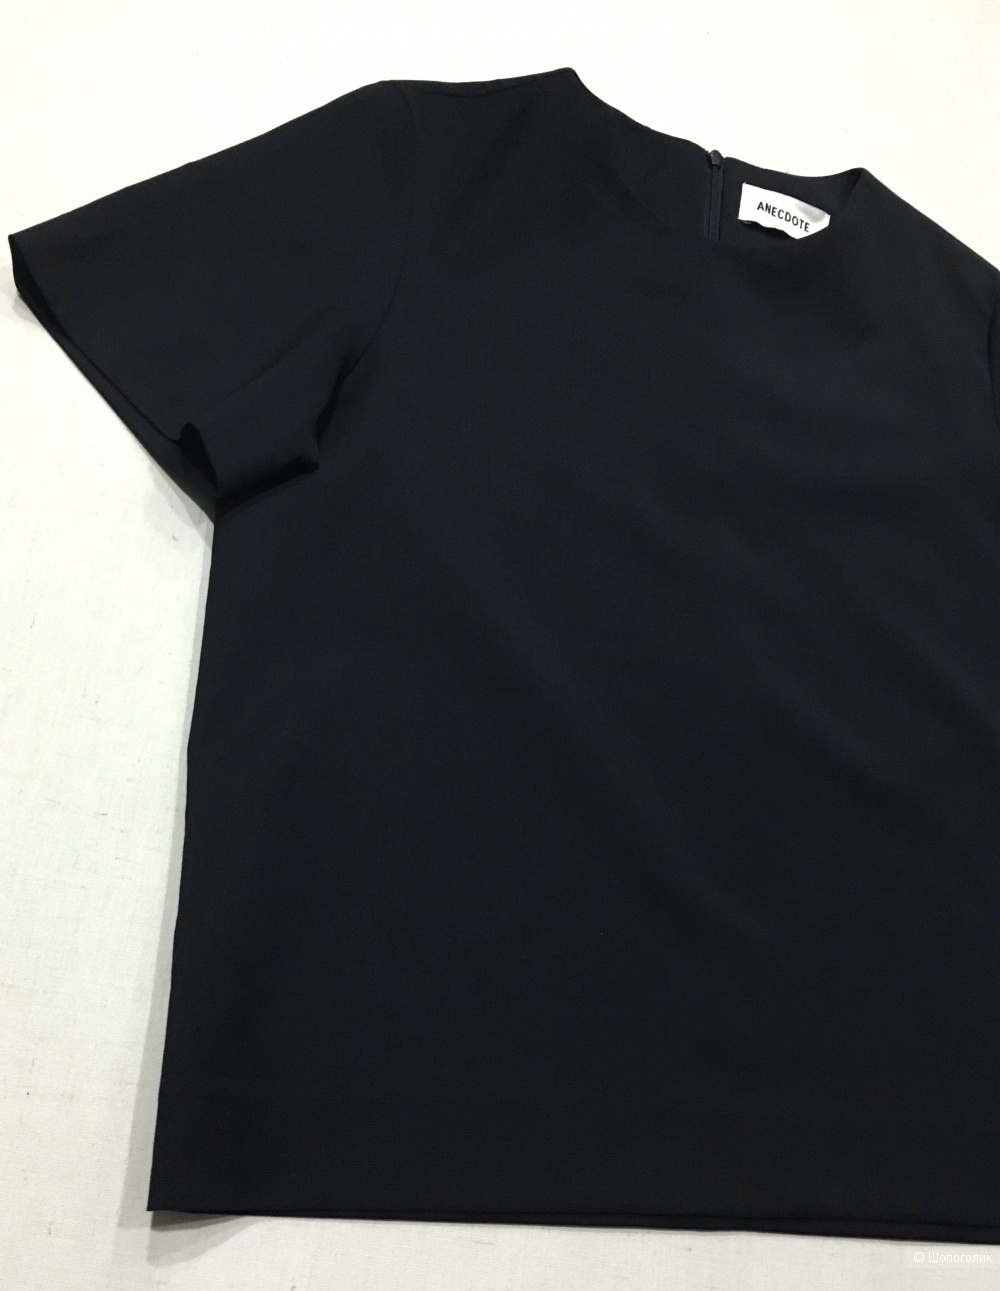 Блузка (топ / футболка) бренда Anecdote, размер S (42-44)